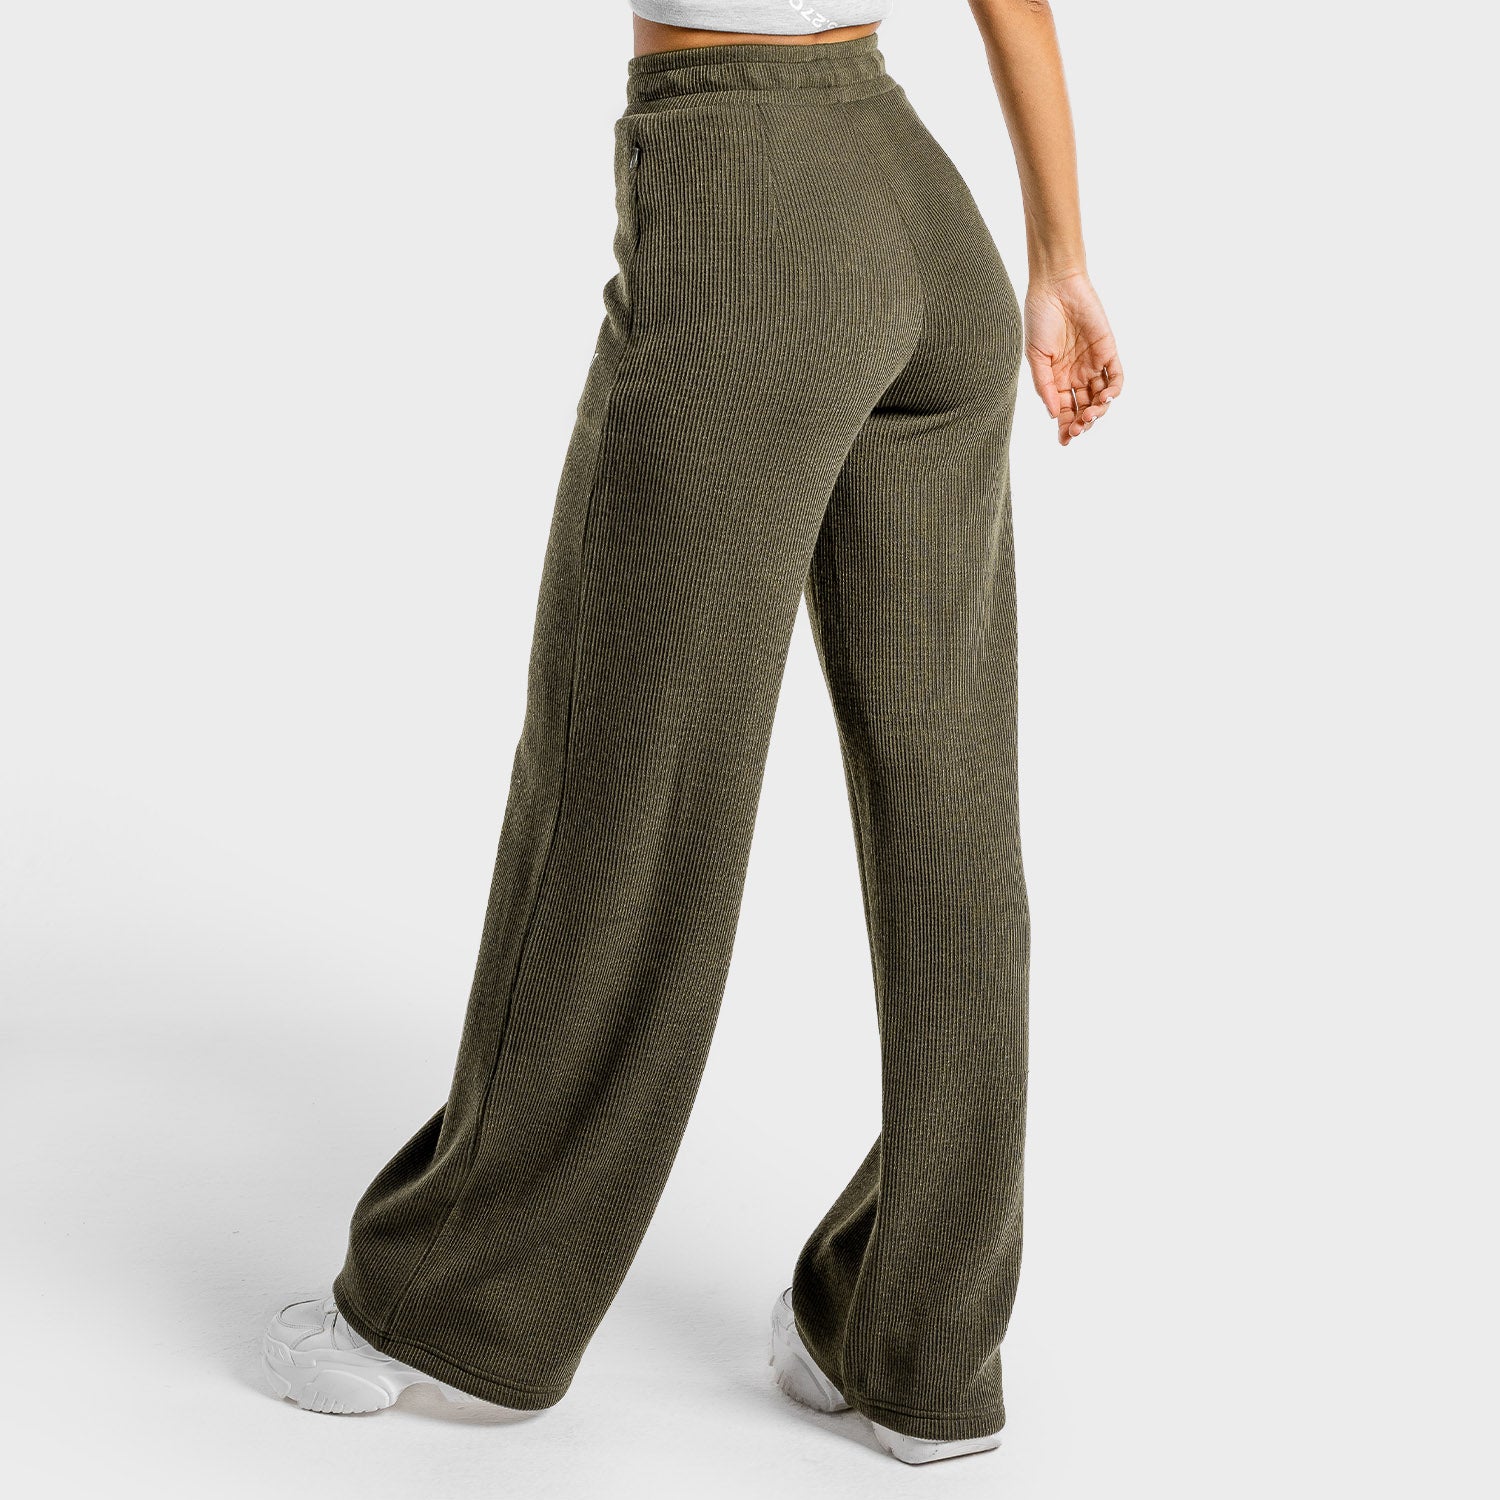 CA, Luxe Wide Leg Pants - Olive, Workout Pants Women